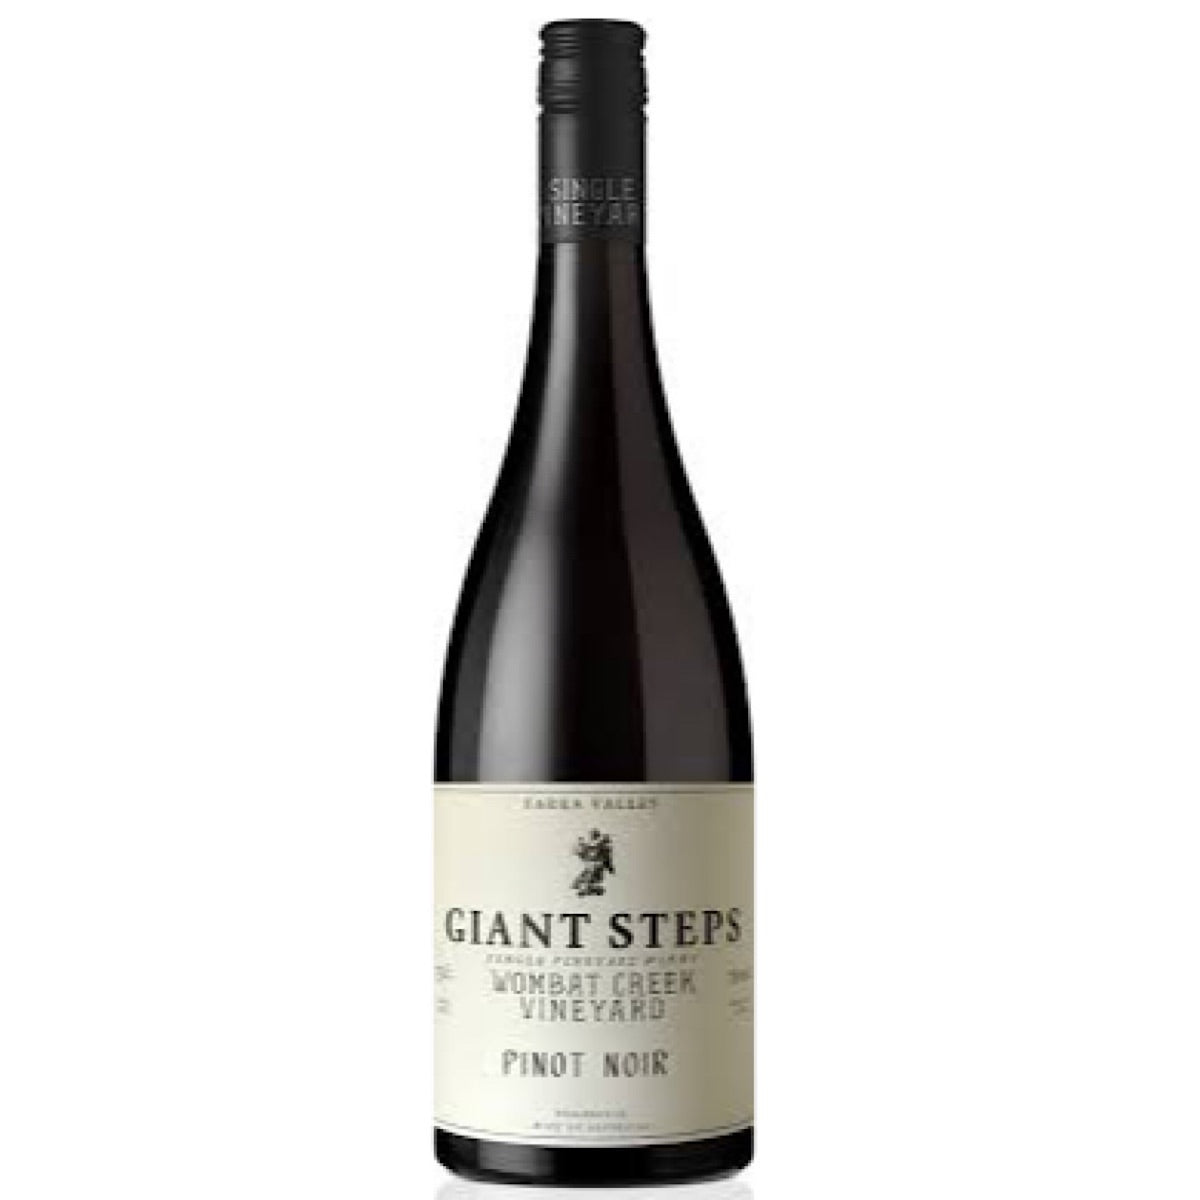 Giant Steps `Wombat Creek Vineyard` Yarra Valley Pinot Noir 6 Bottle Case.